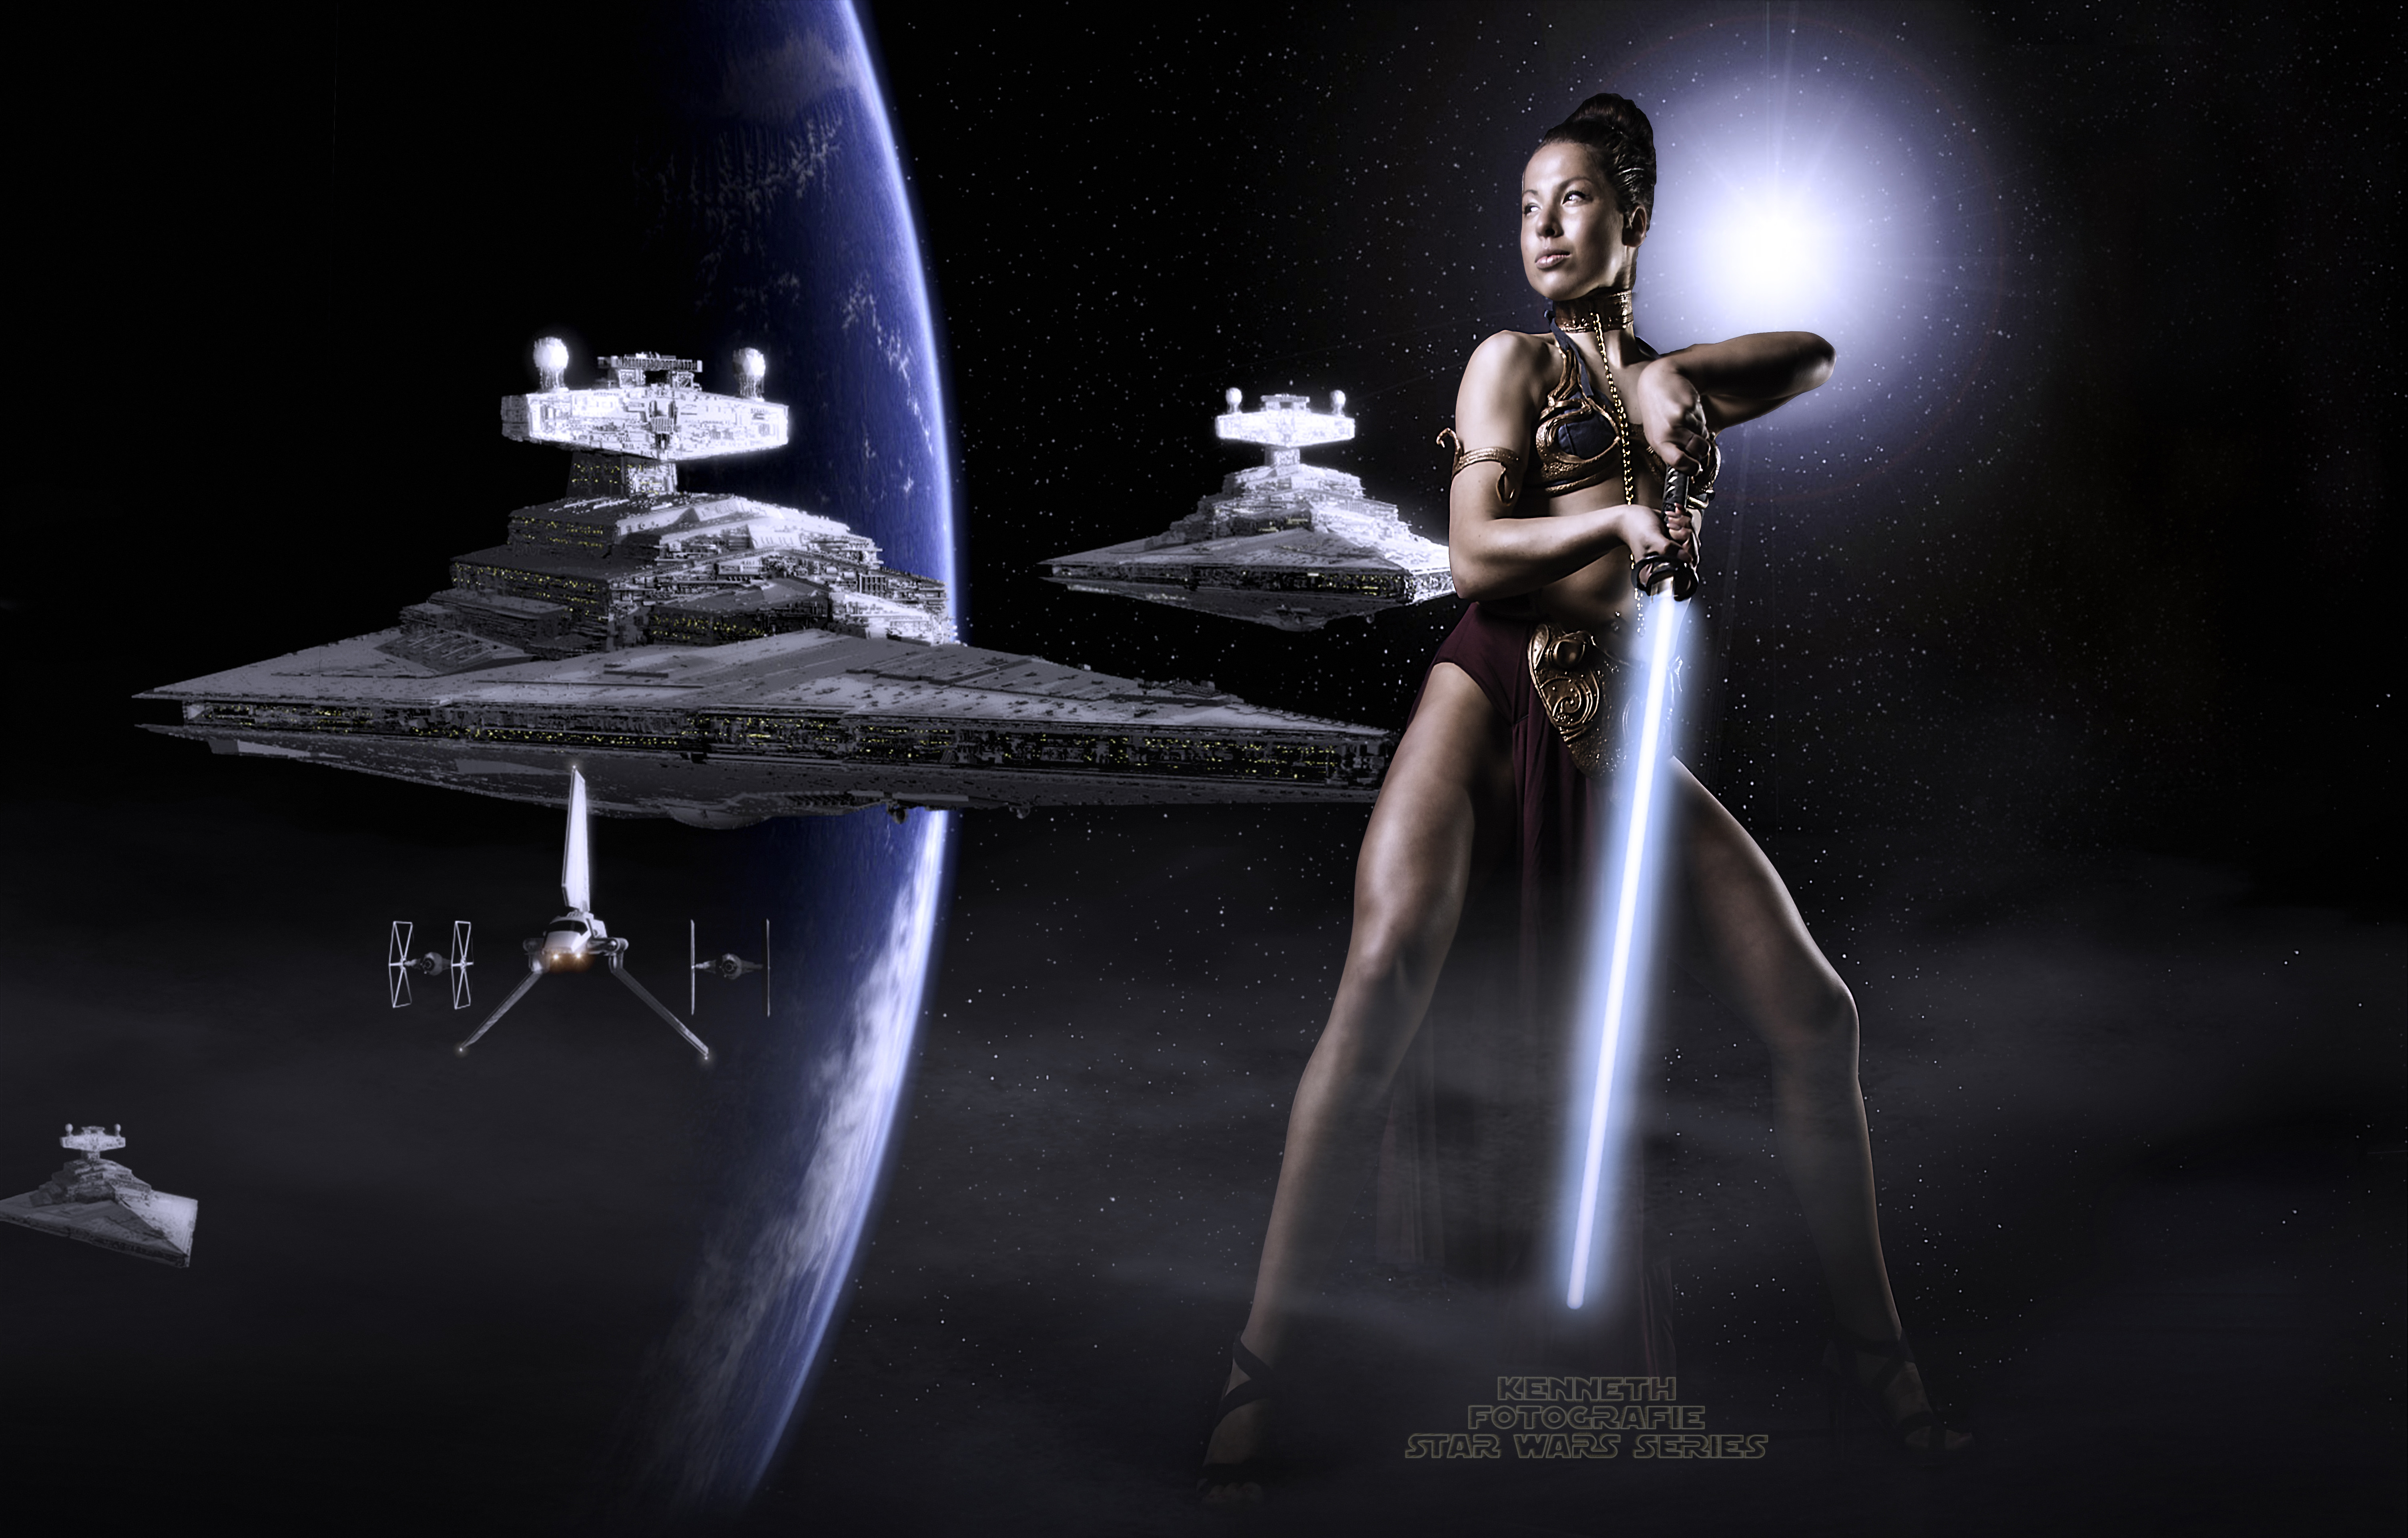 Star Wars photoshoot met Amy als “Slave Leia”